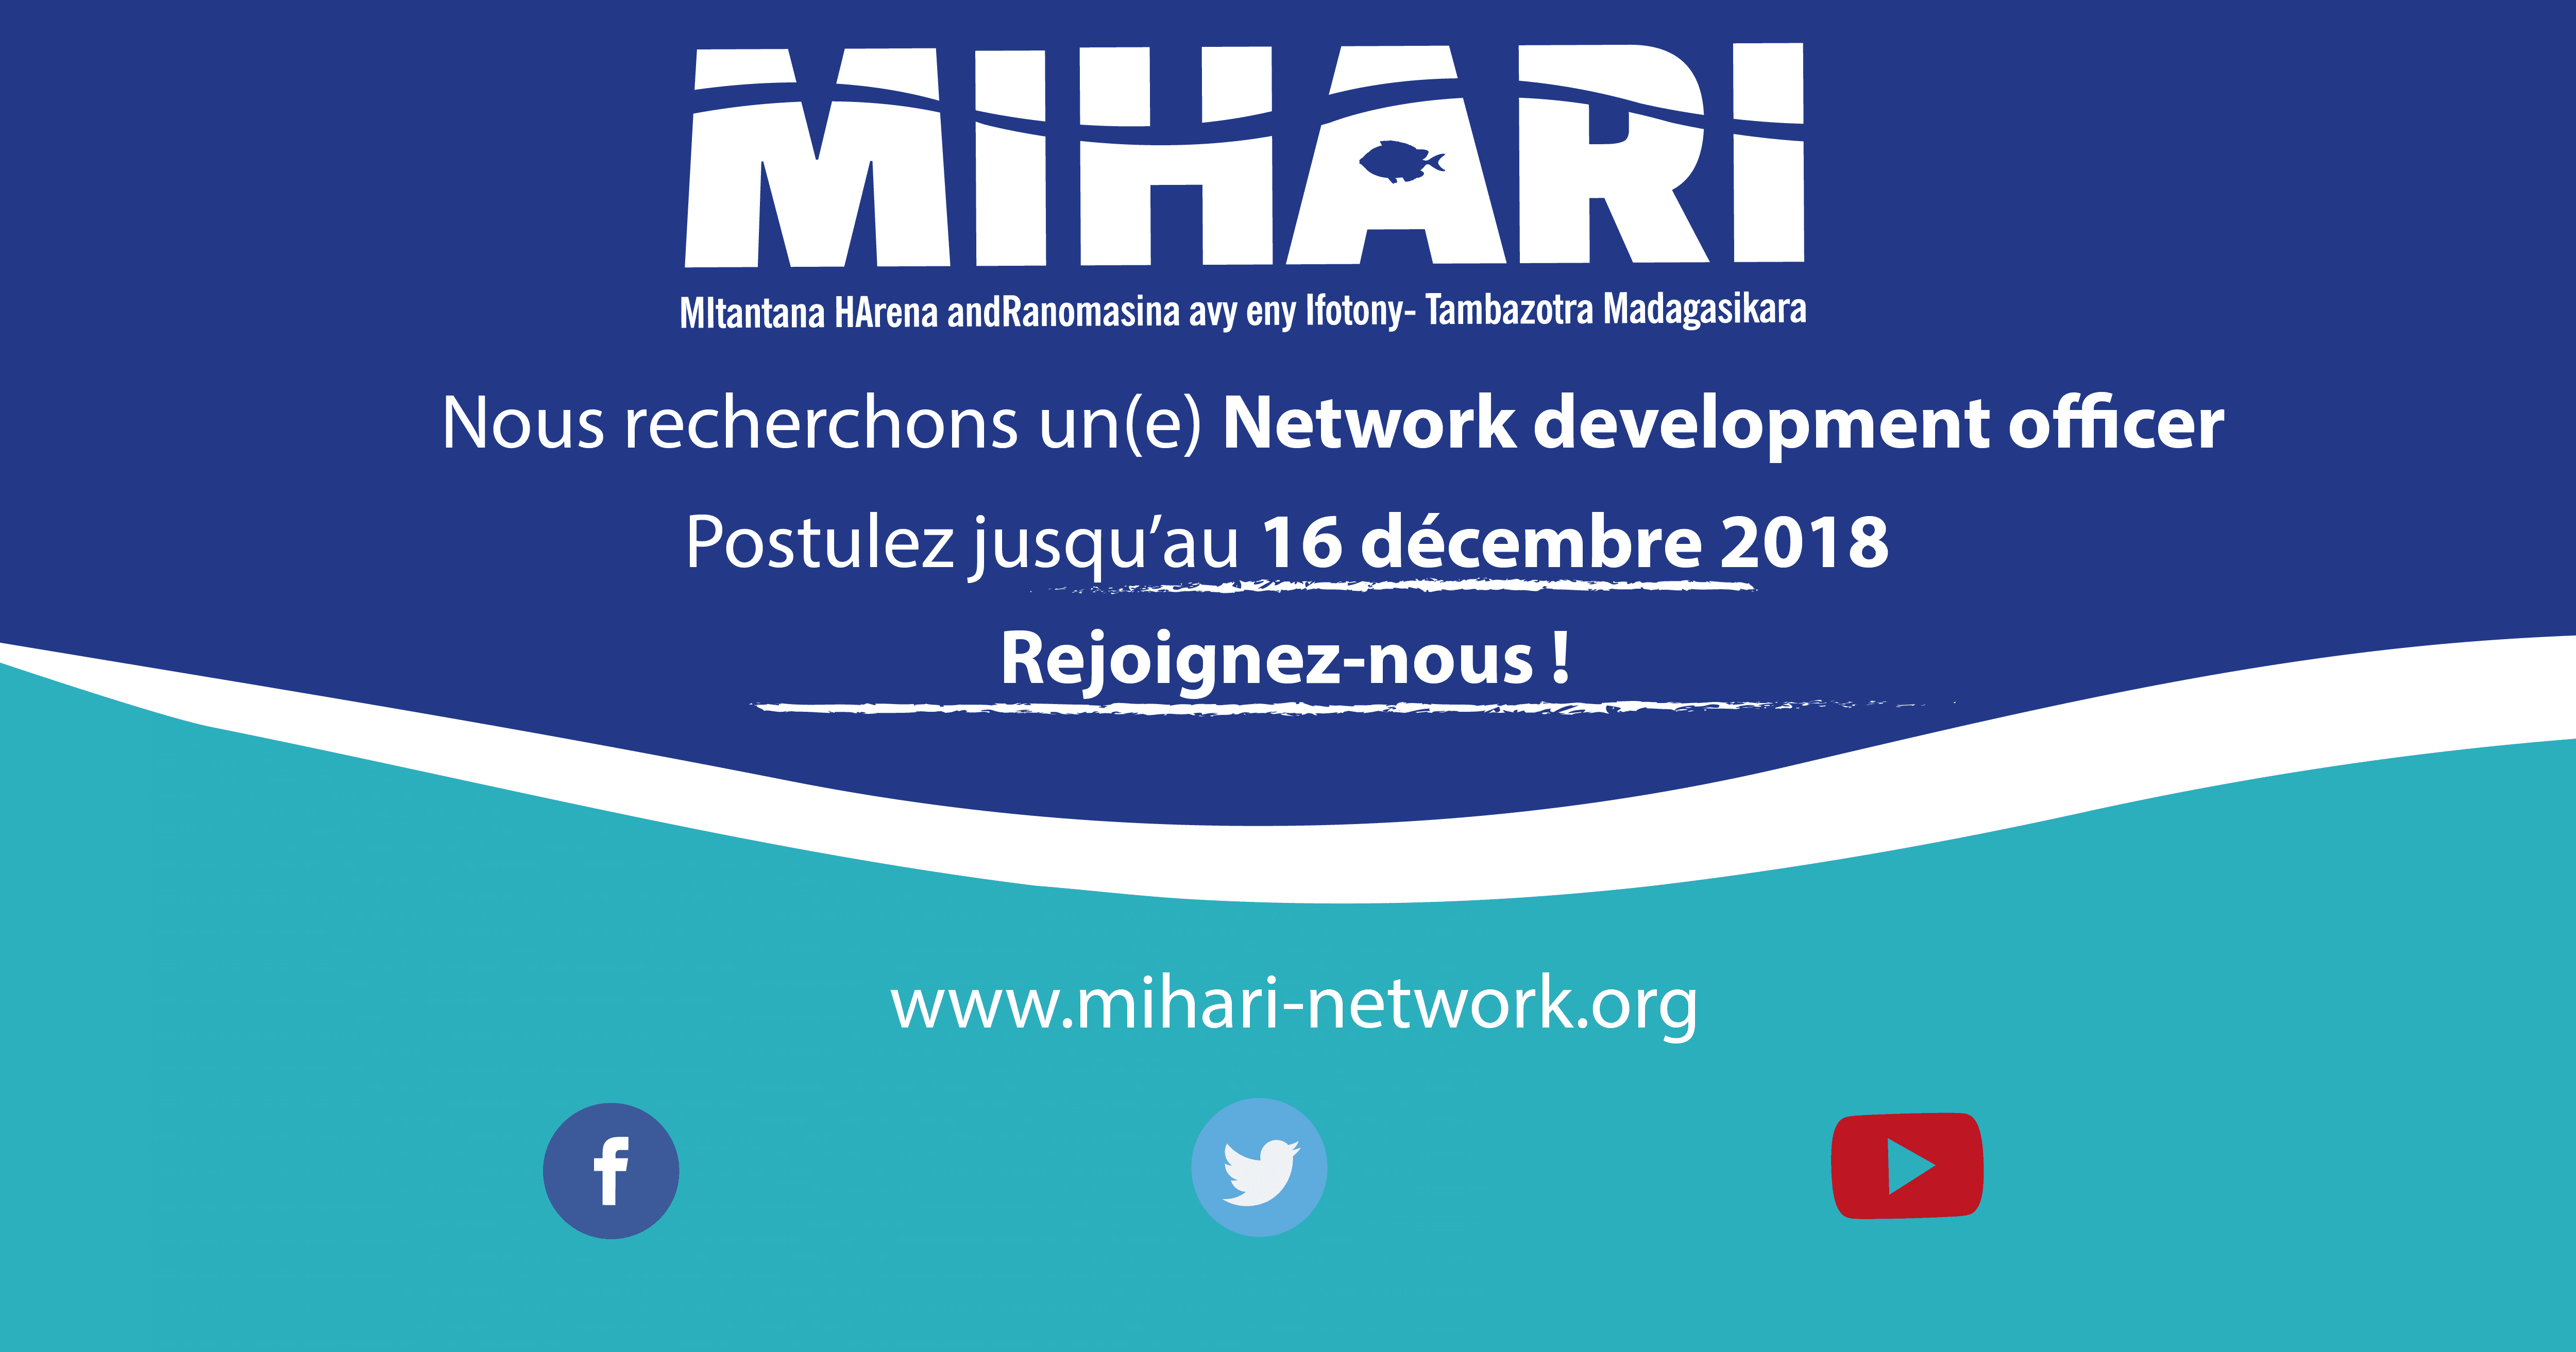 Lire la suite à propos de l’article MIHARI recrute un(e) Network development officer